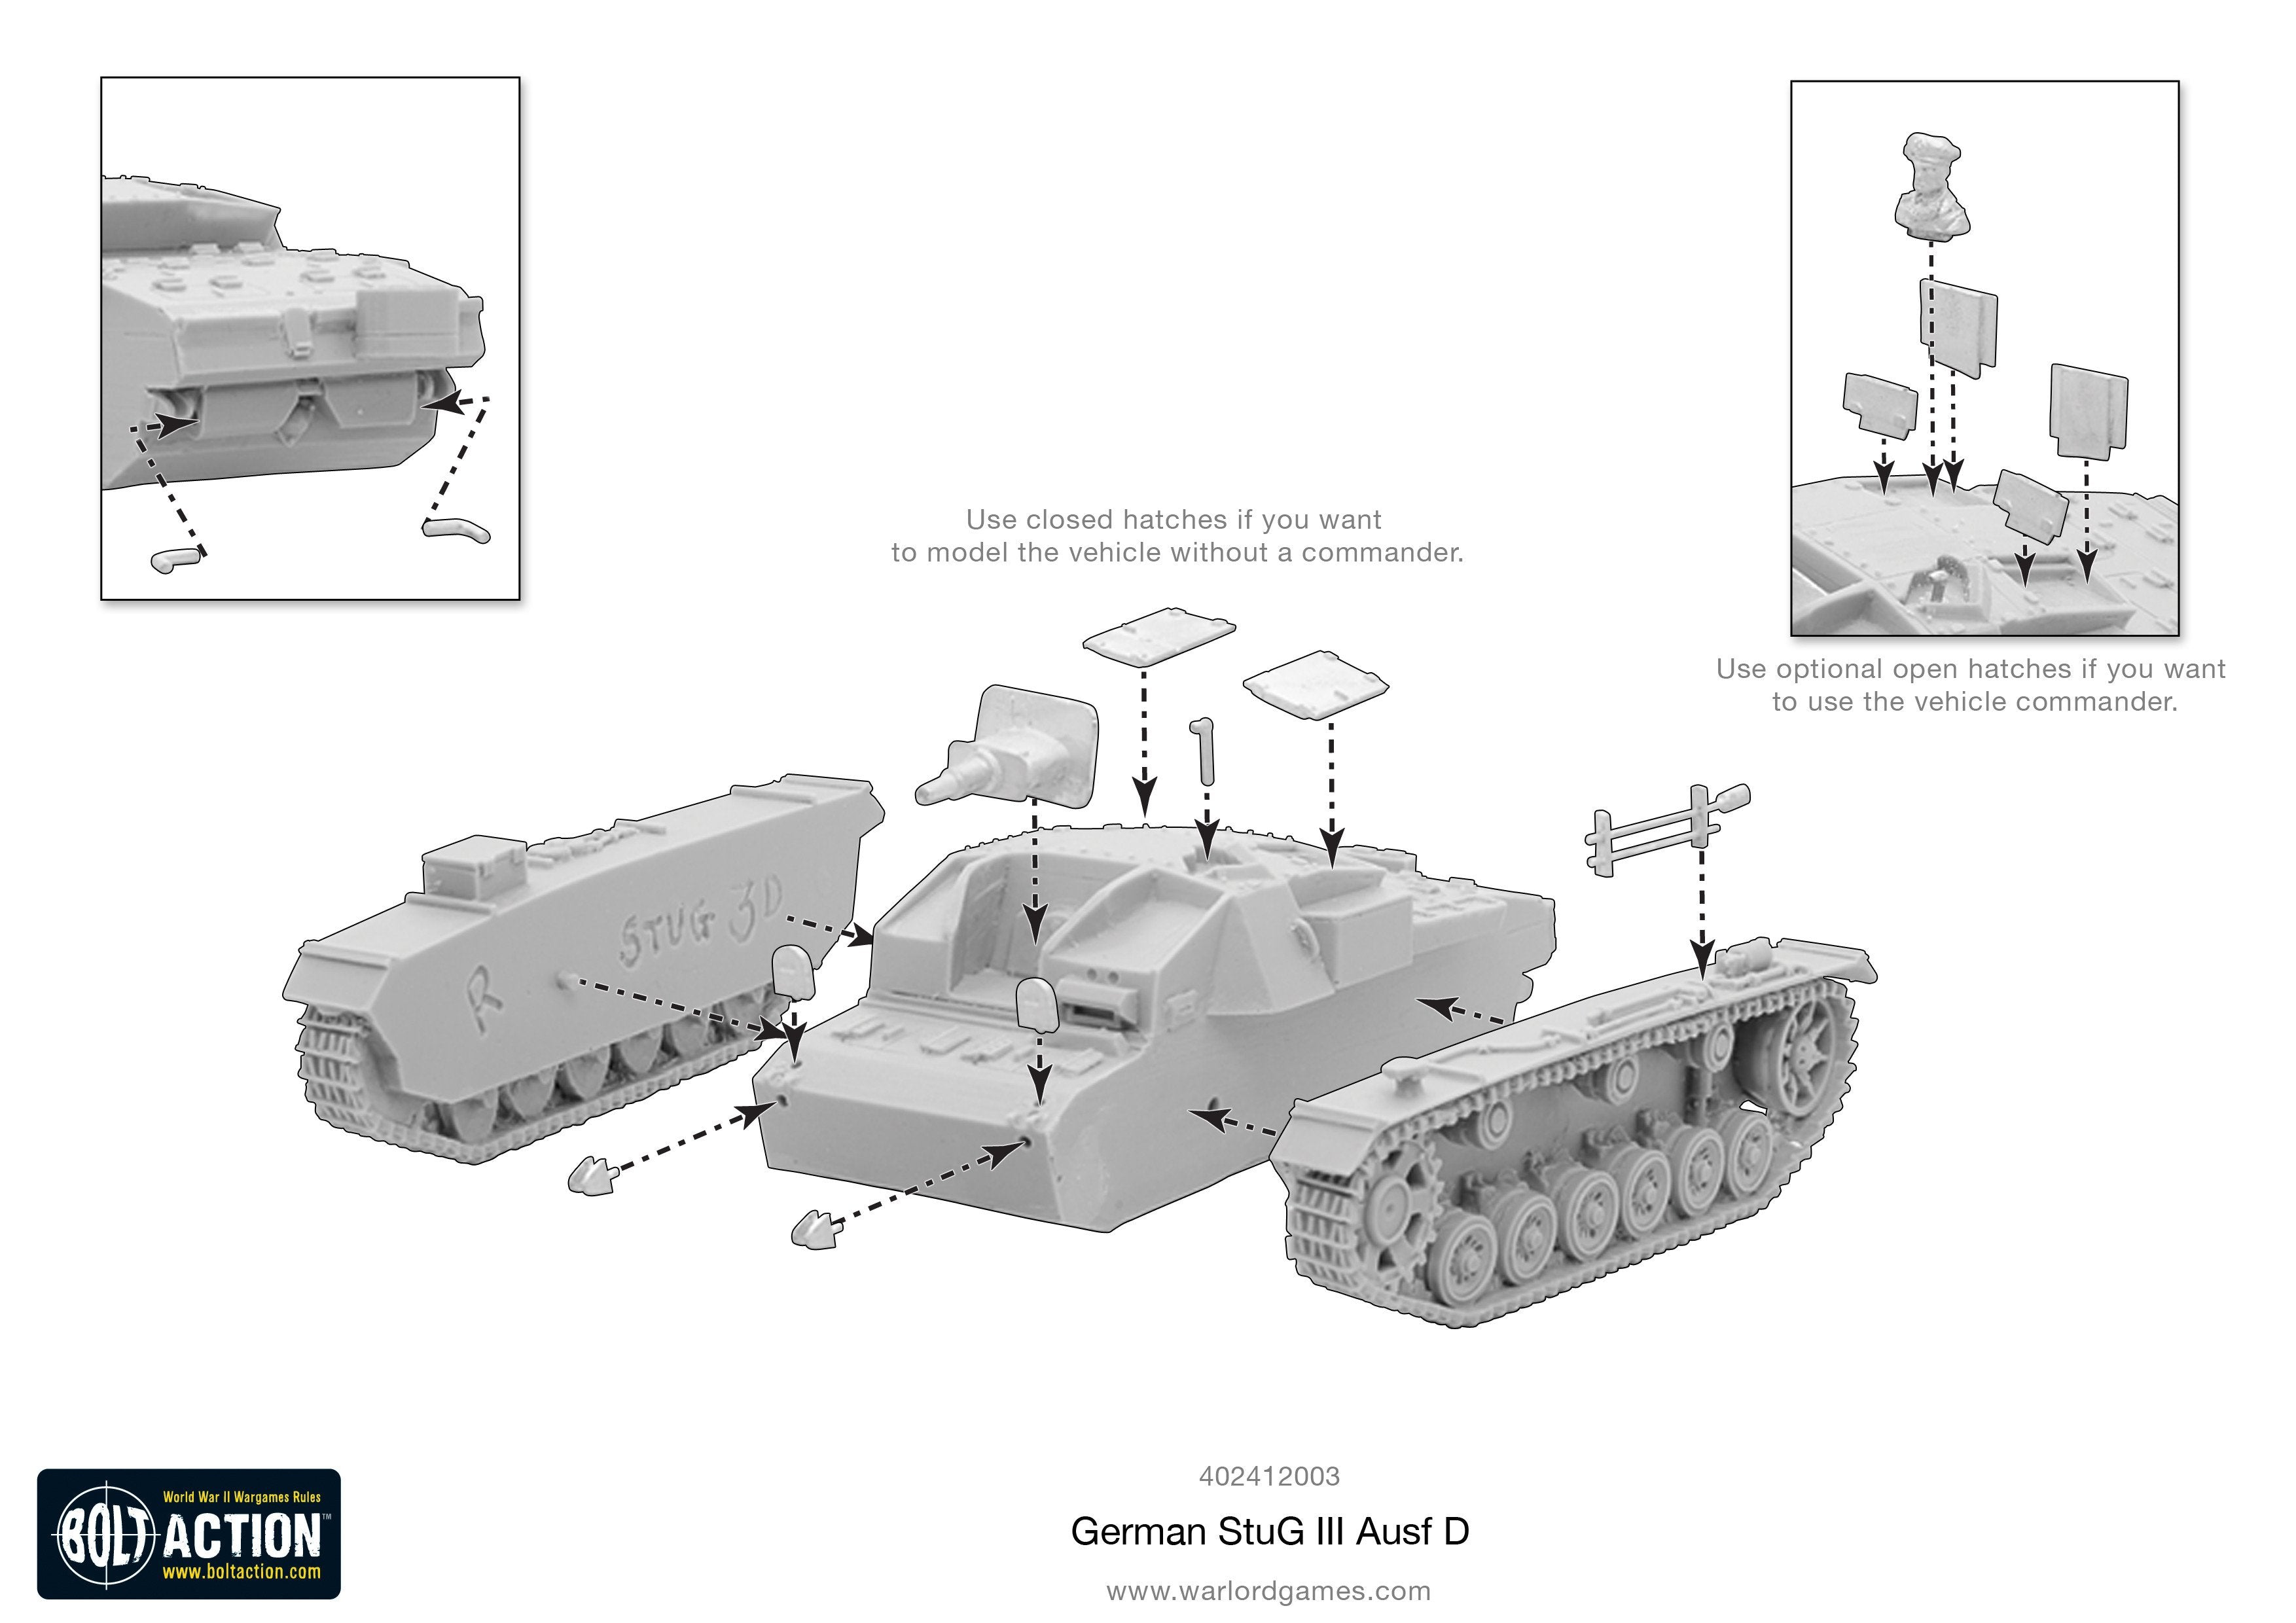 Stug III Ausf D